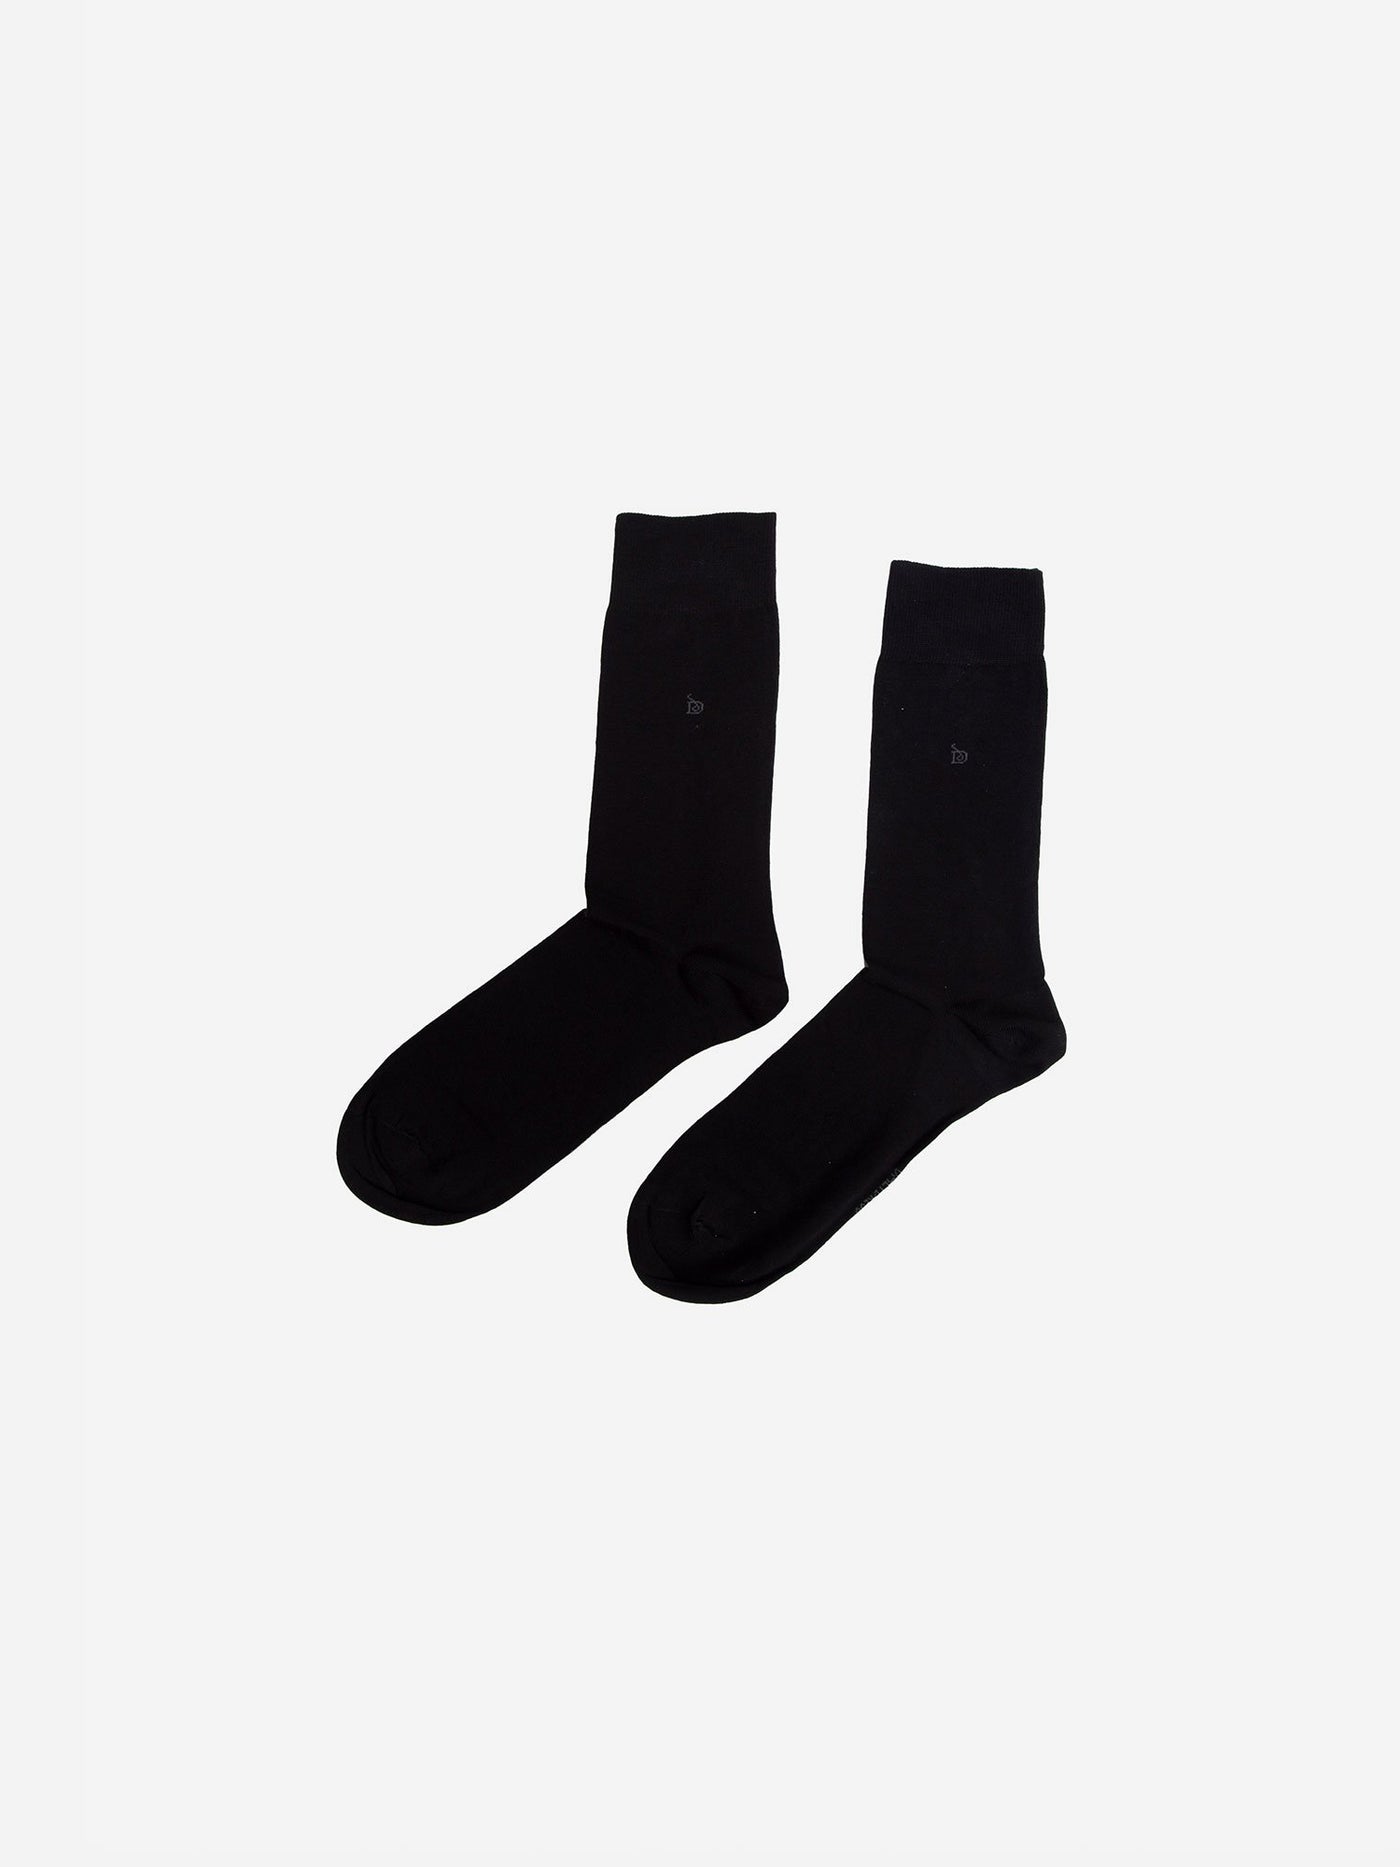 Dalydress Mens Plain Classic Socks